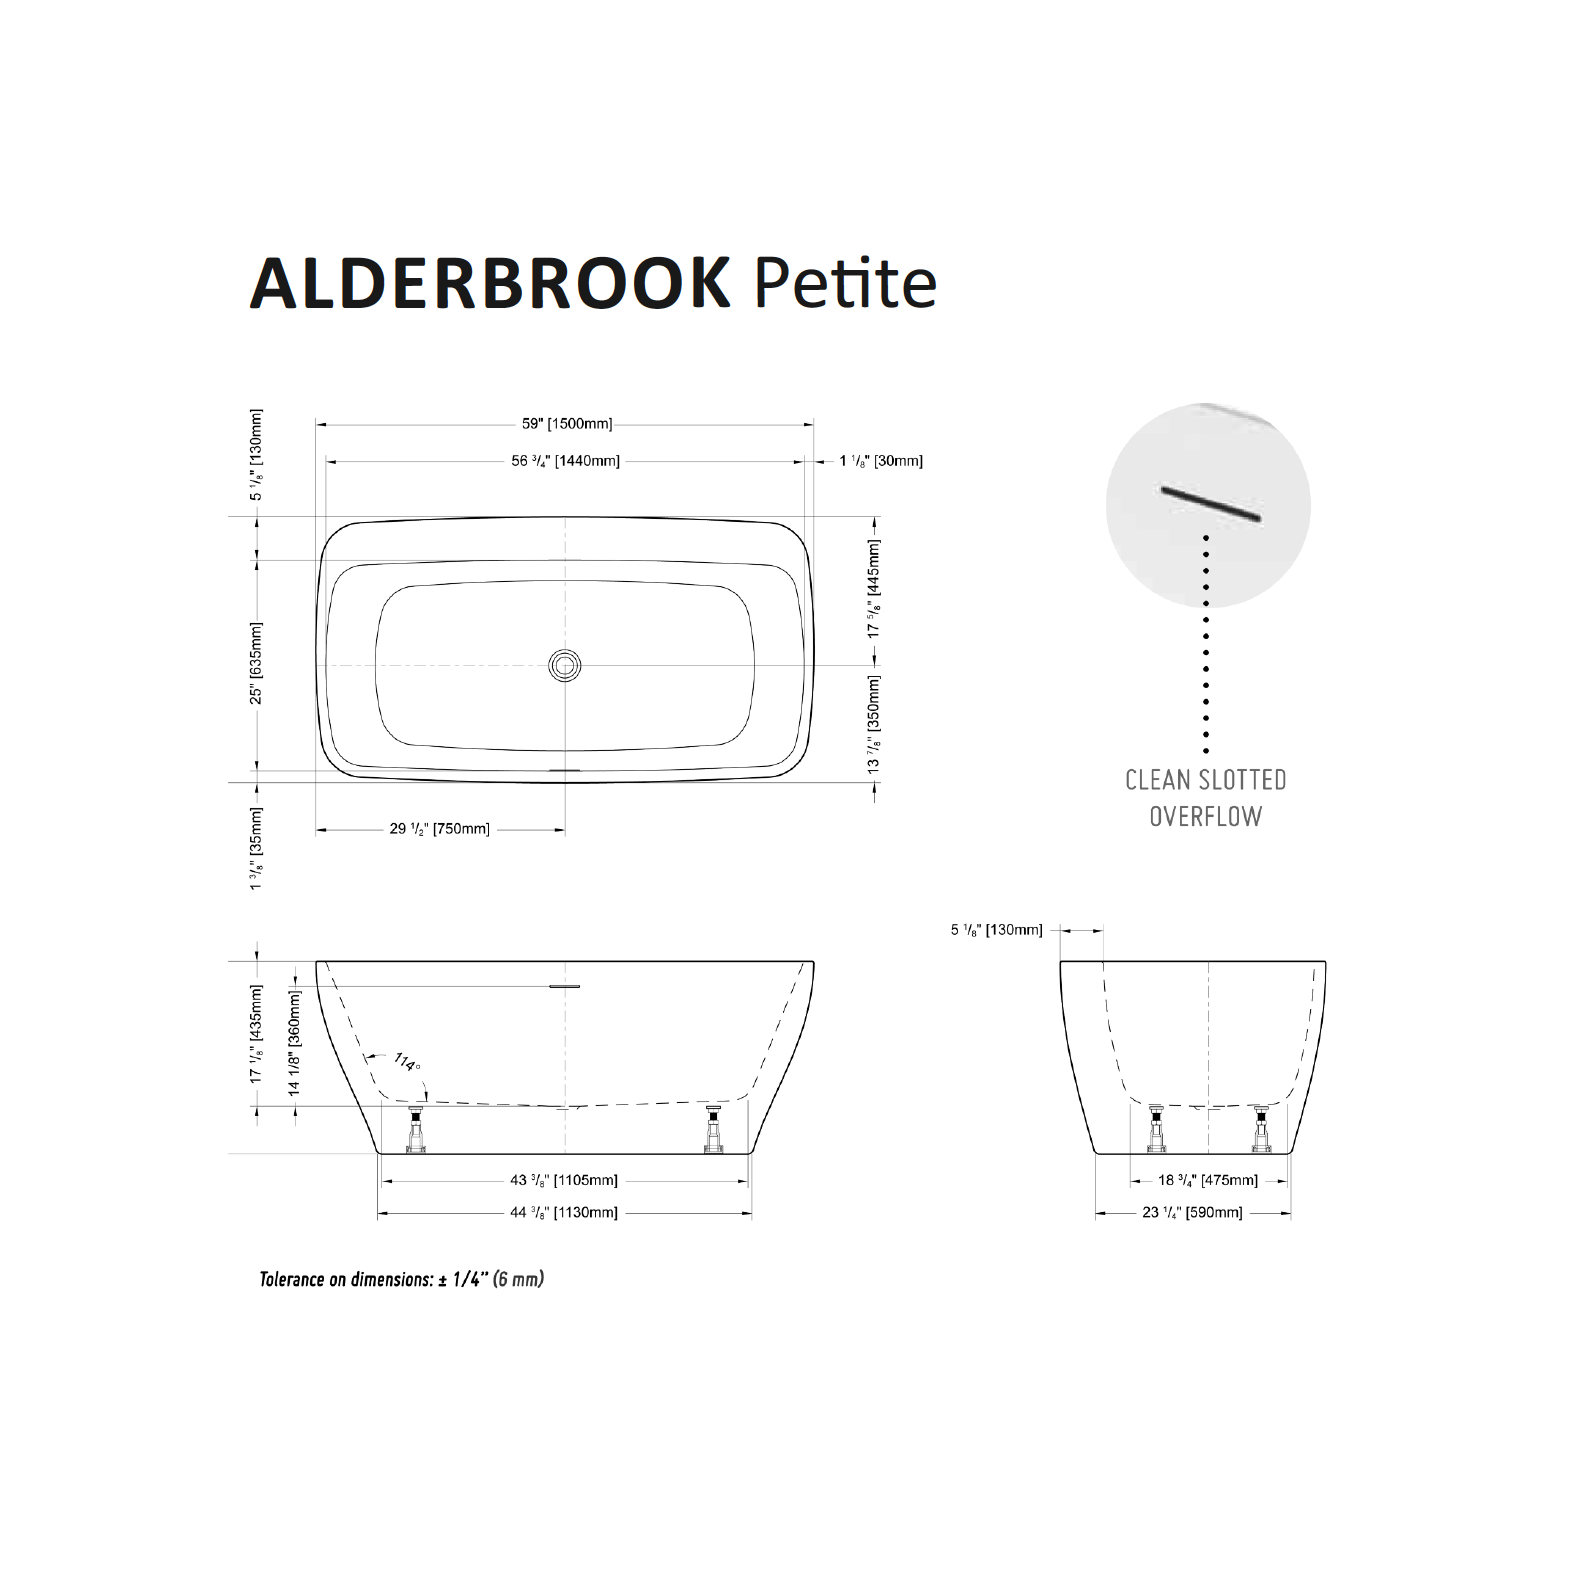 Alderbrook Petite Tub Specifications